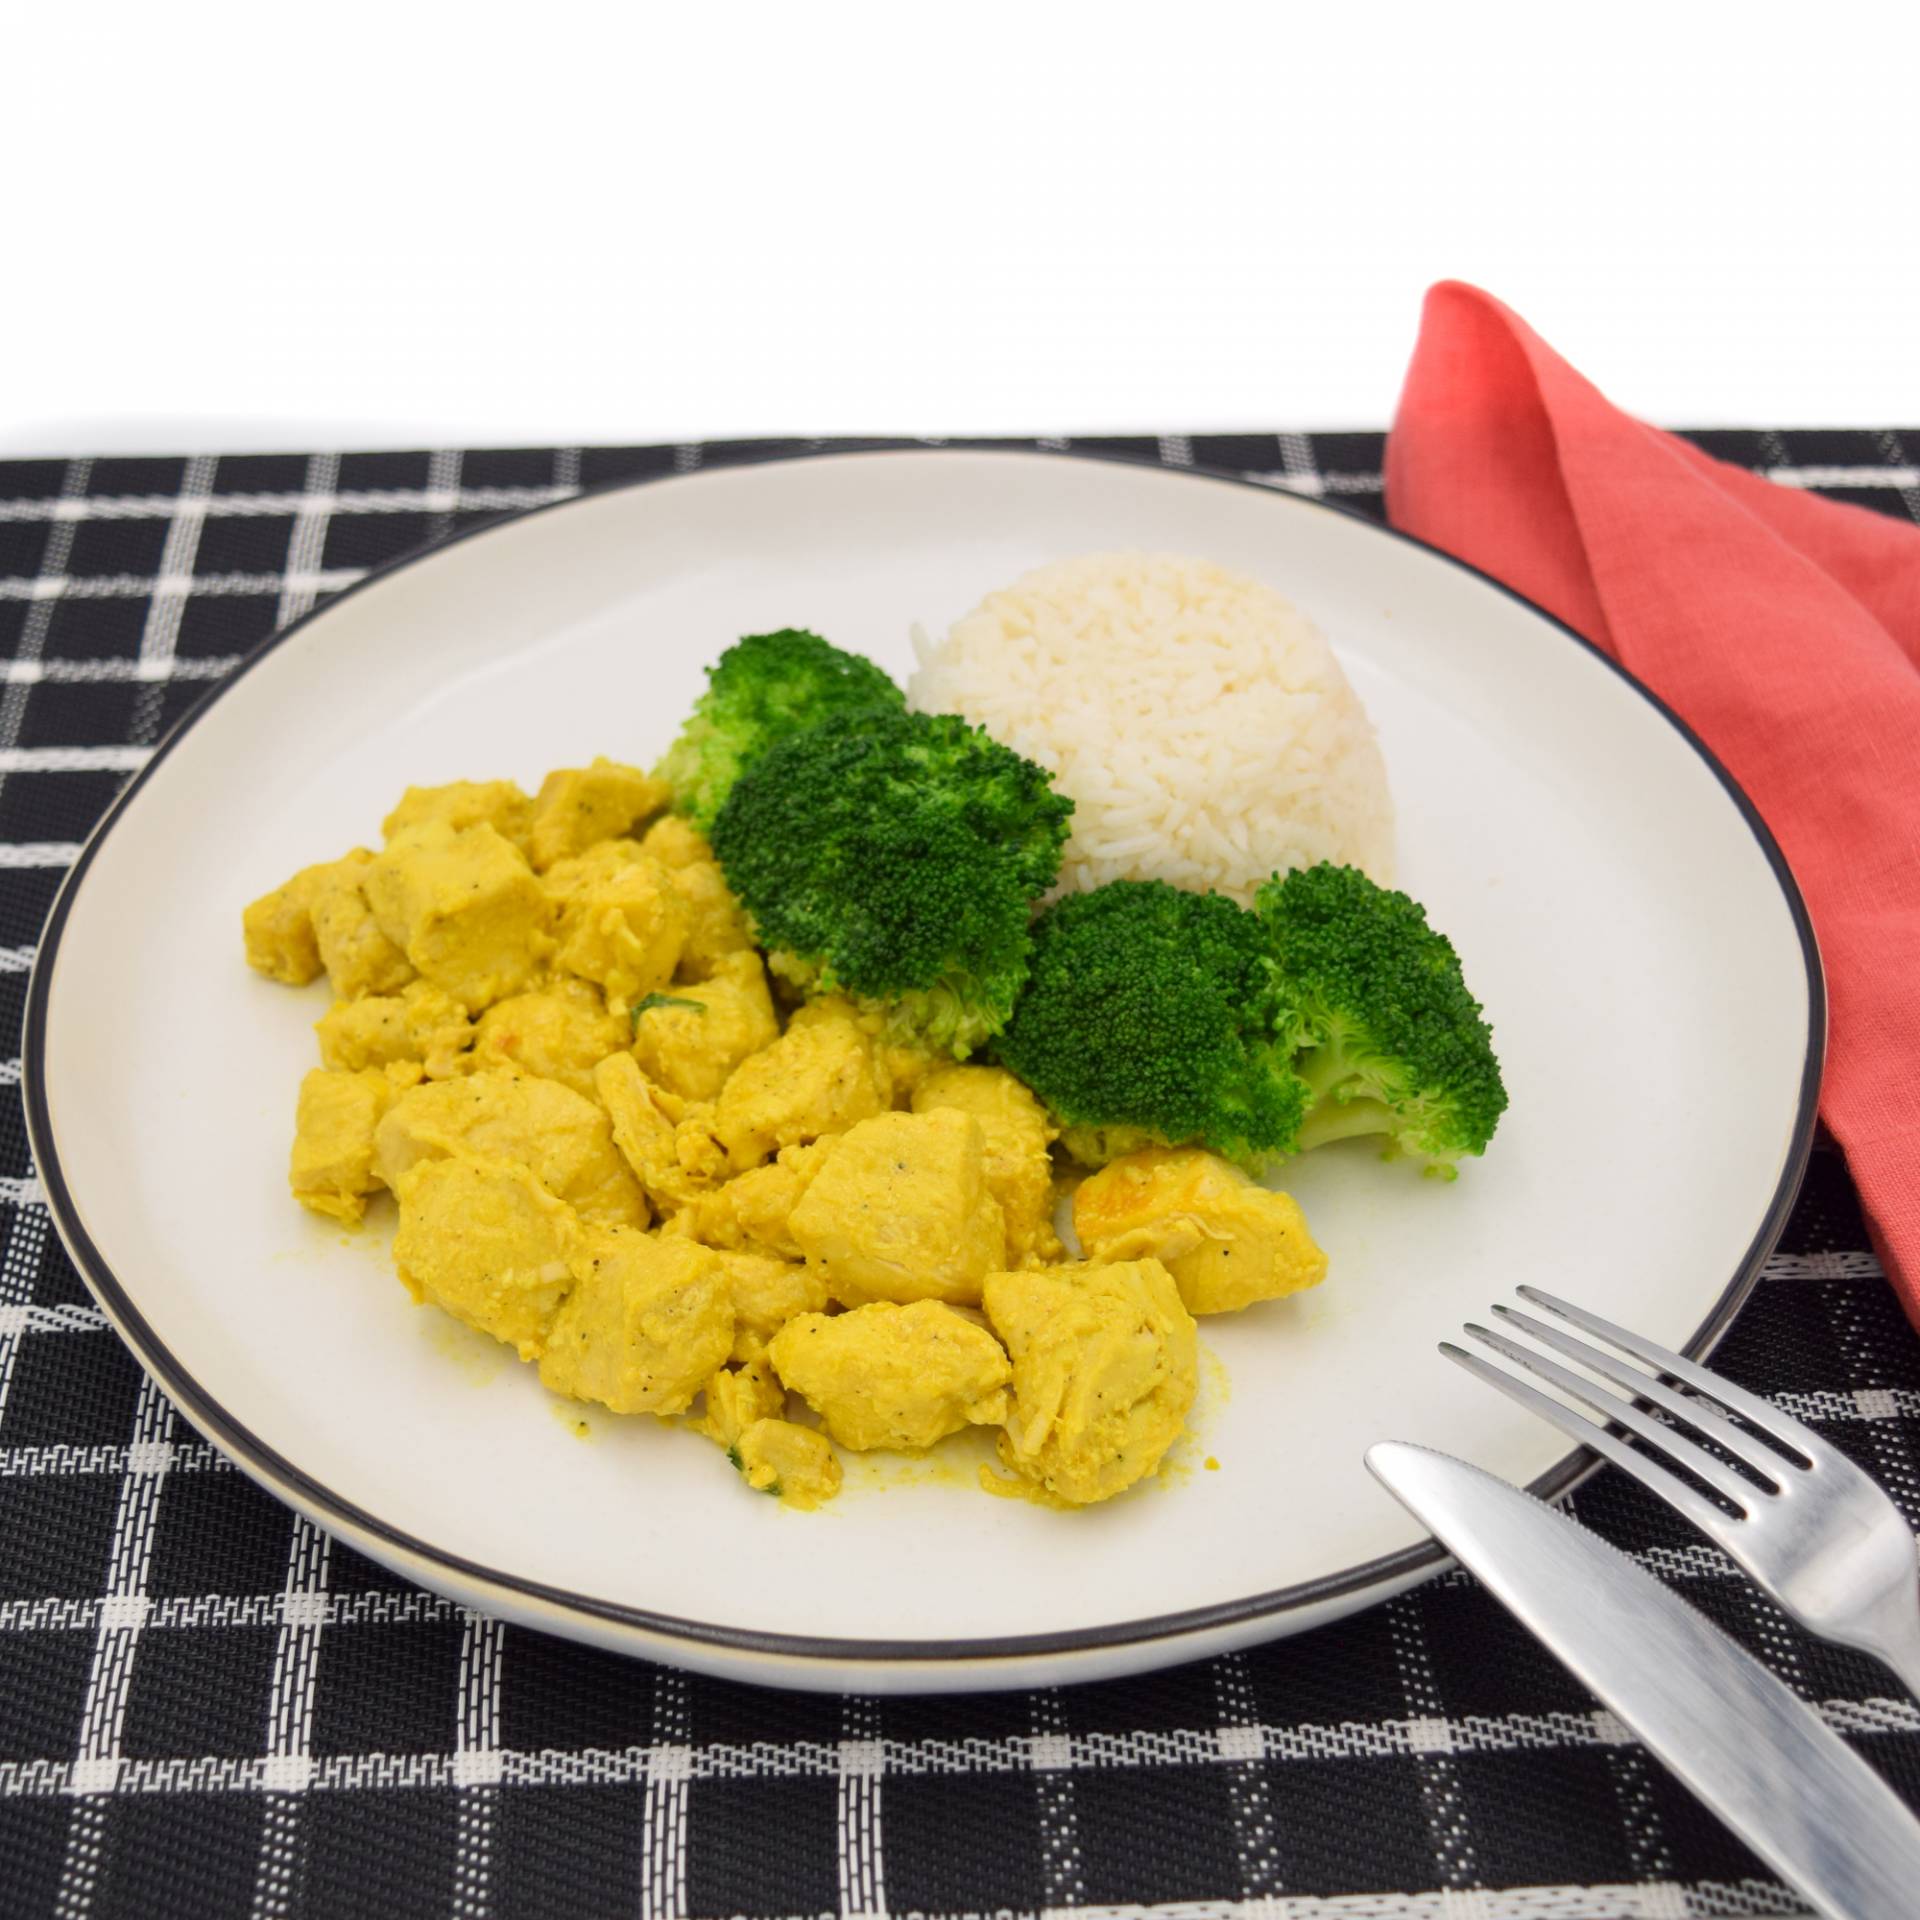 Mustard chicken with jasmine rice and broccoli